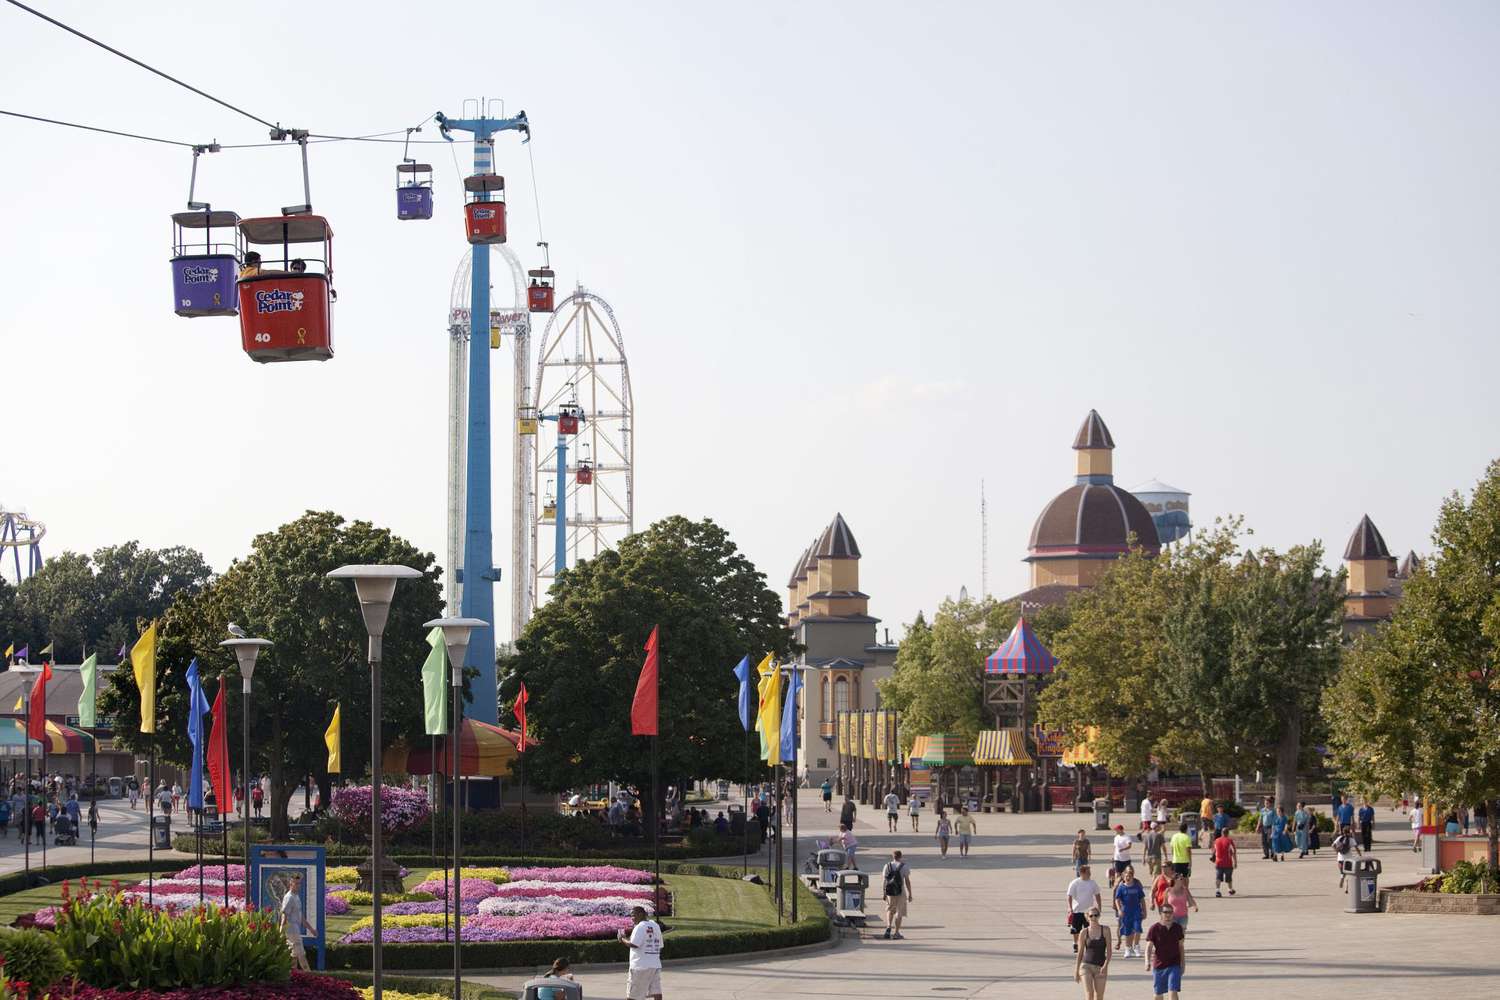 Cedar Point amusement park in Sandusky, Ohio.